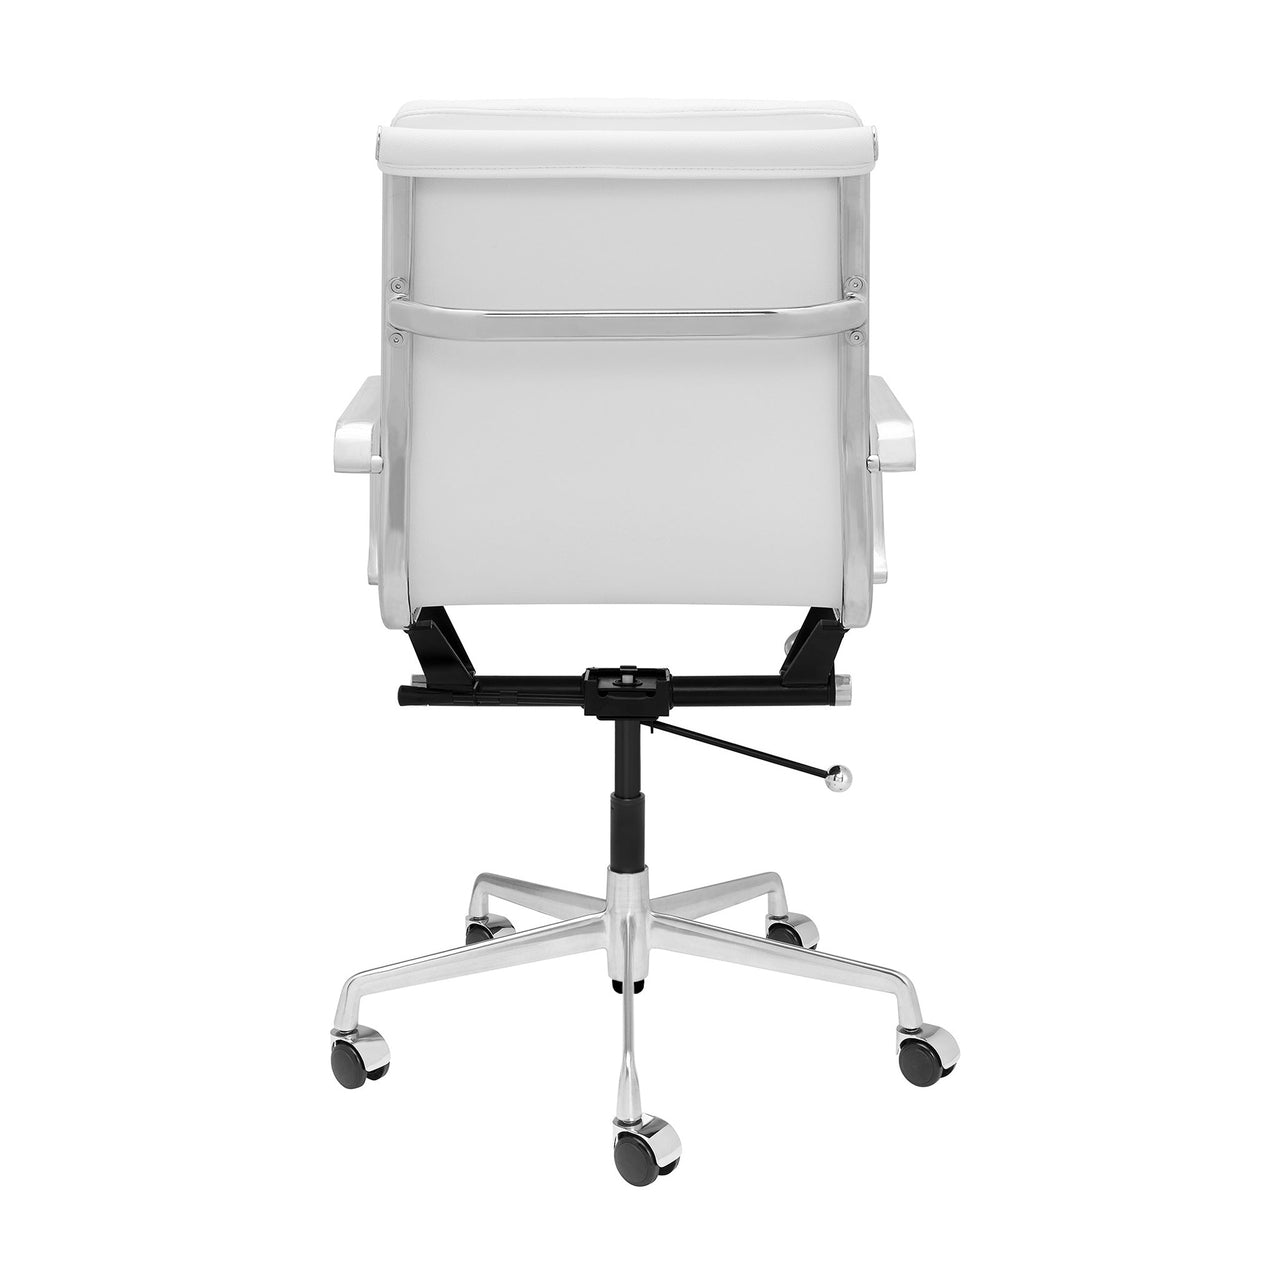 Classic SOHO Soft Padded Management Chair (White)